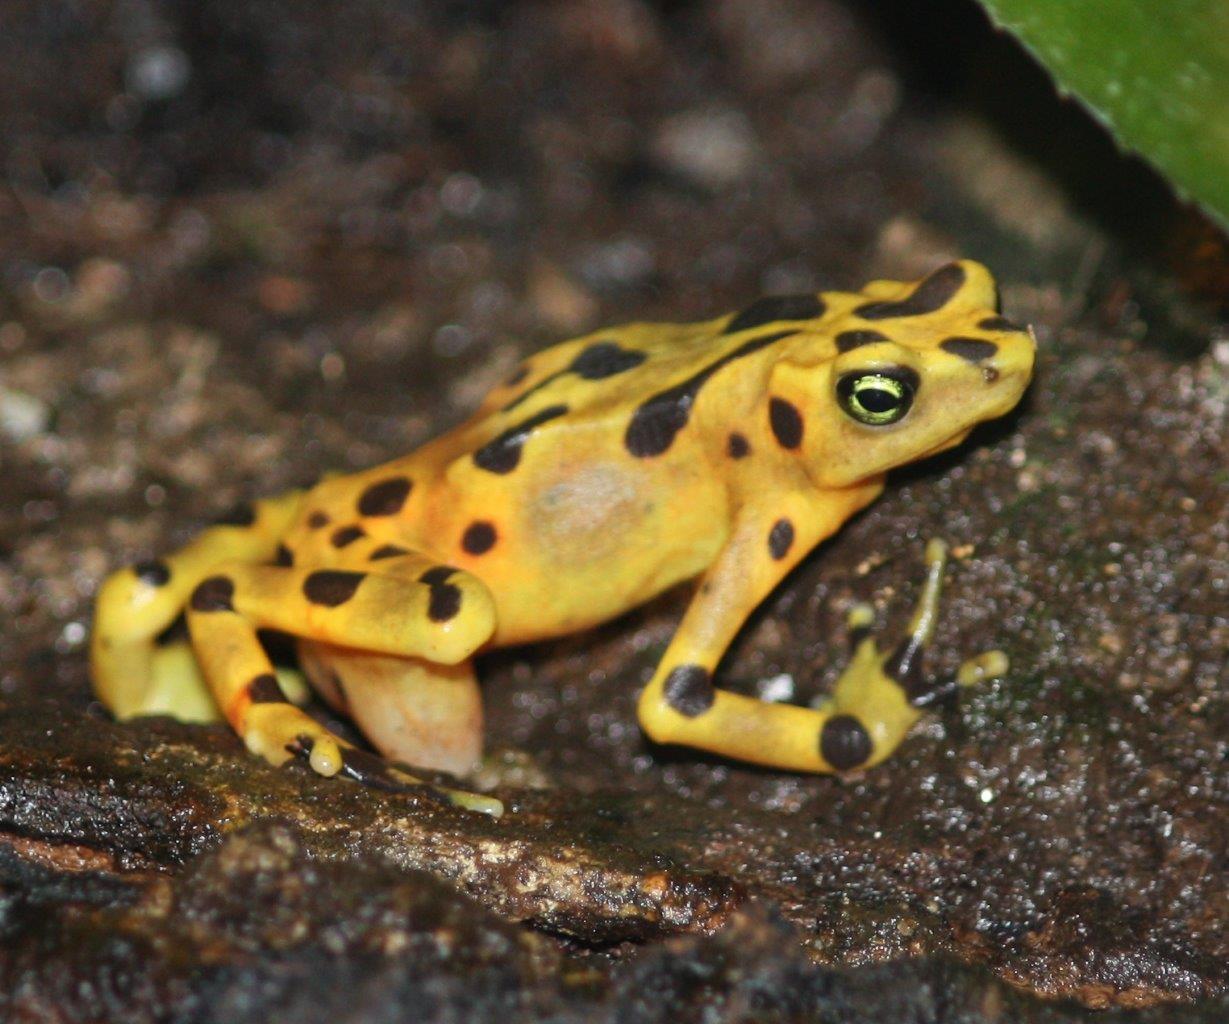 Panamanian Golden Frog photo by Ltshears CC BY-SA 3.0 